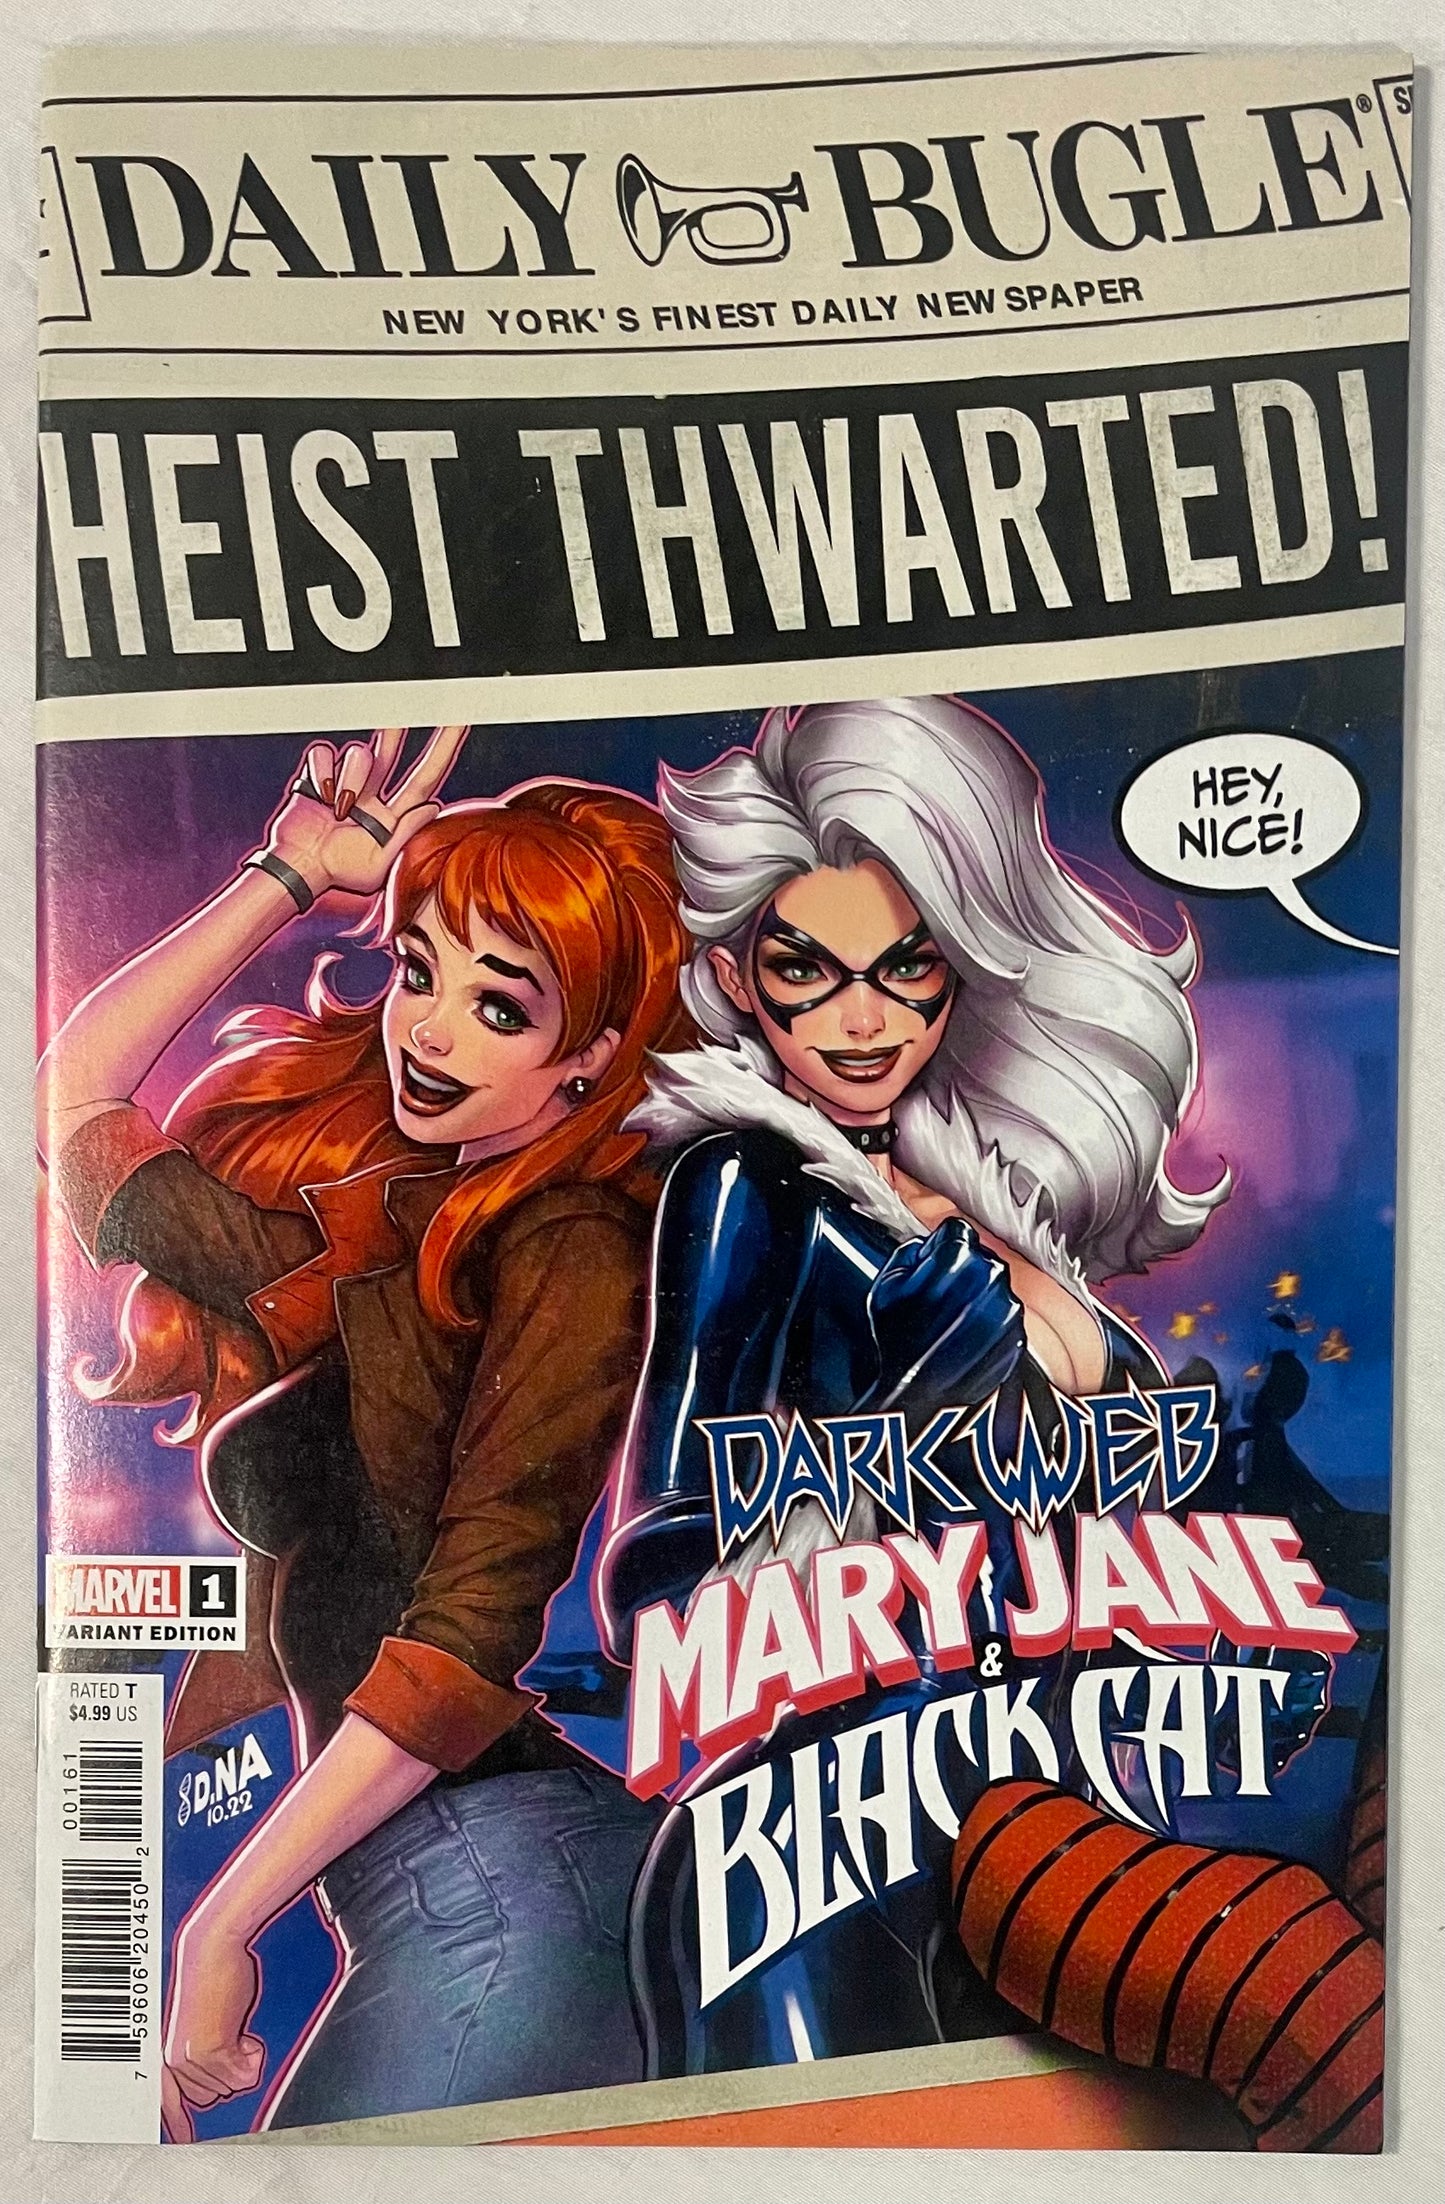 Marvel Comics Mary Jane & Black Cat #1 CVR F